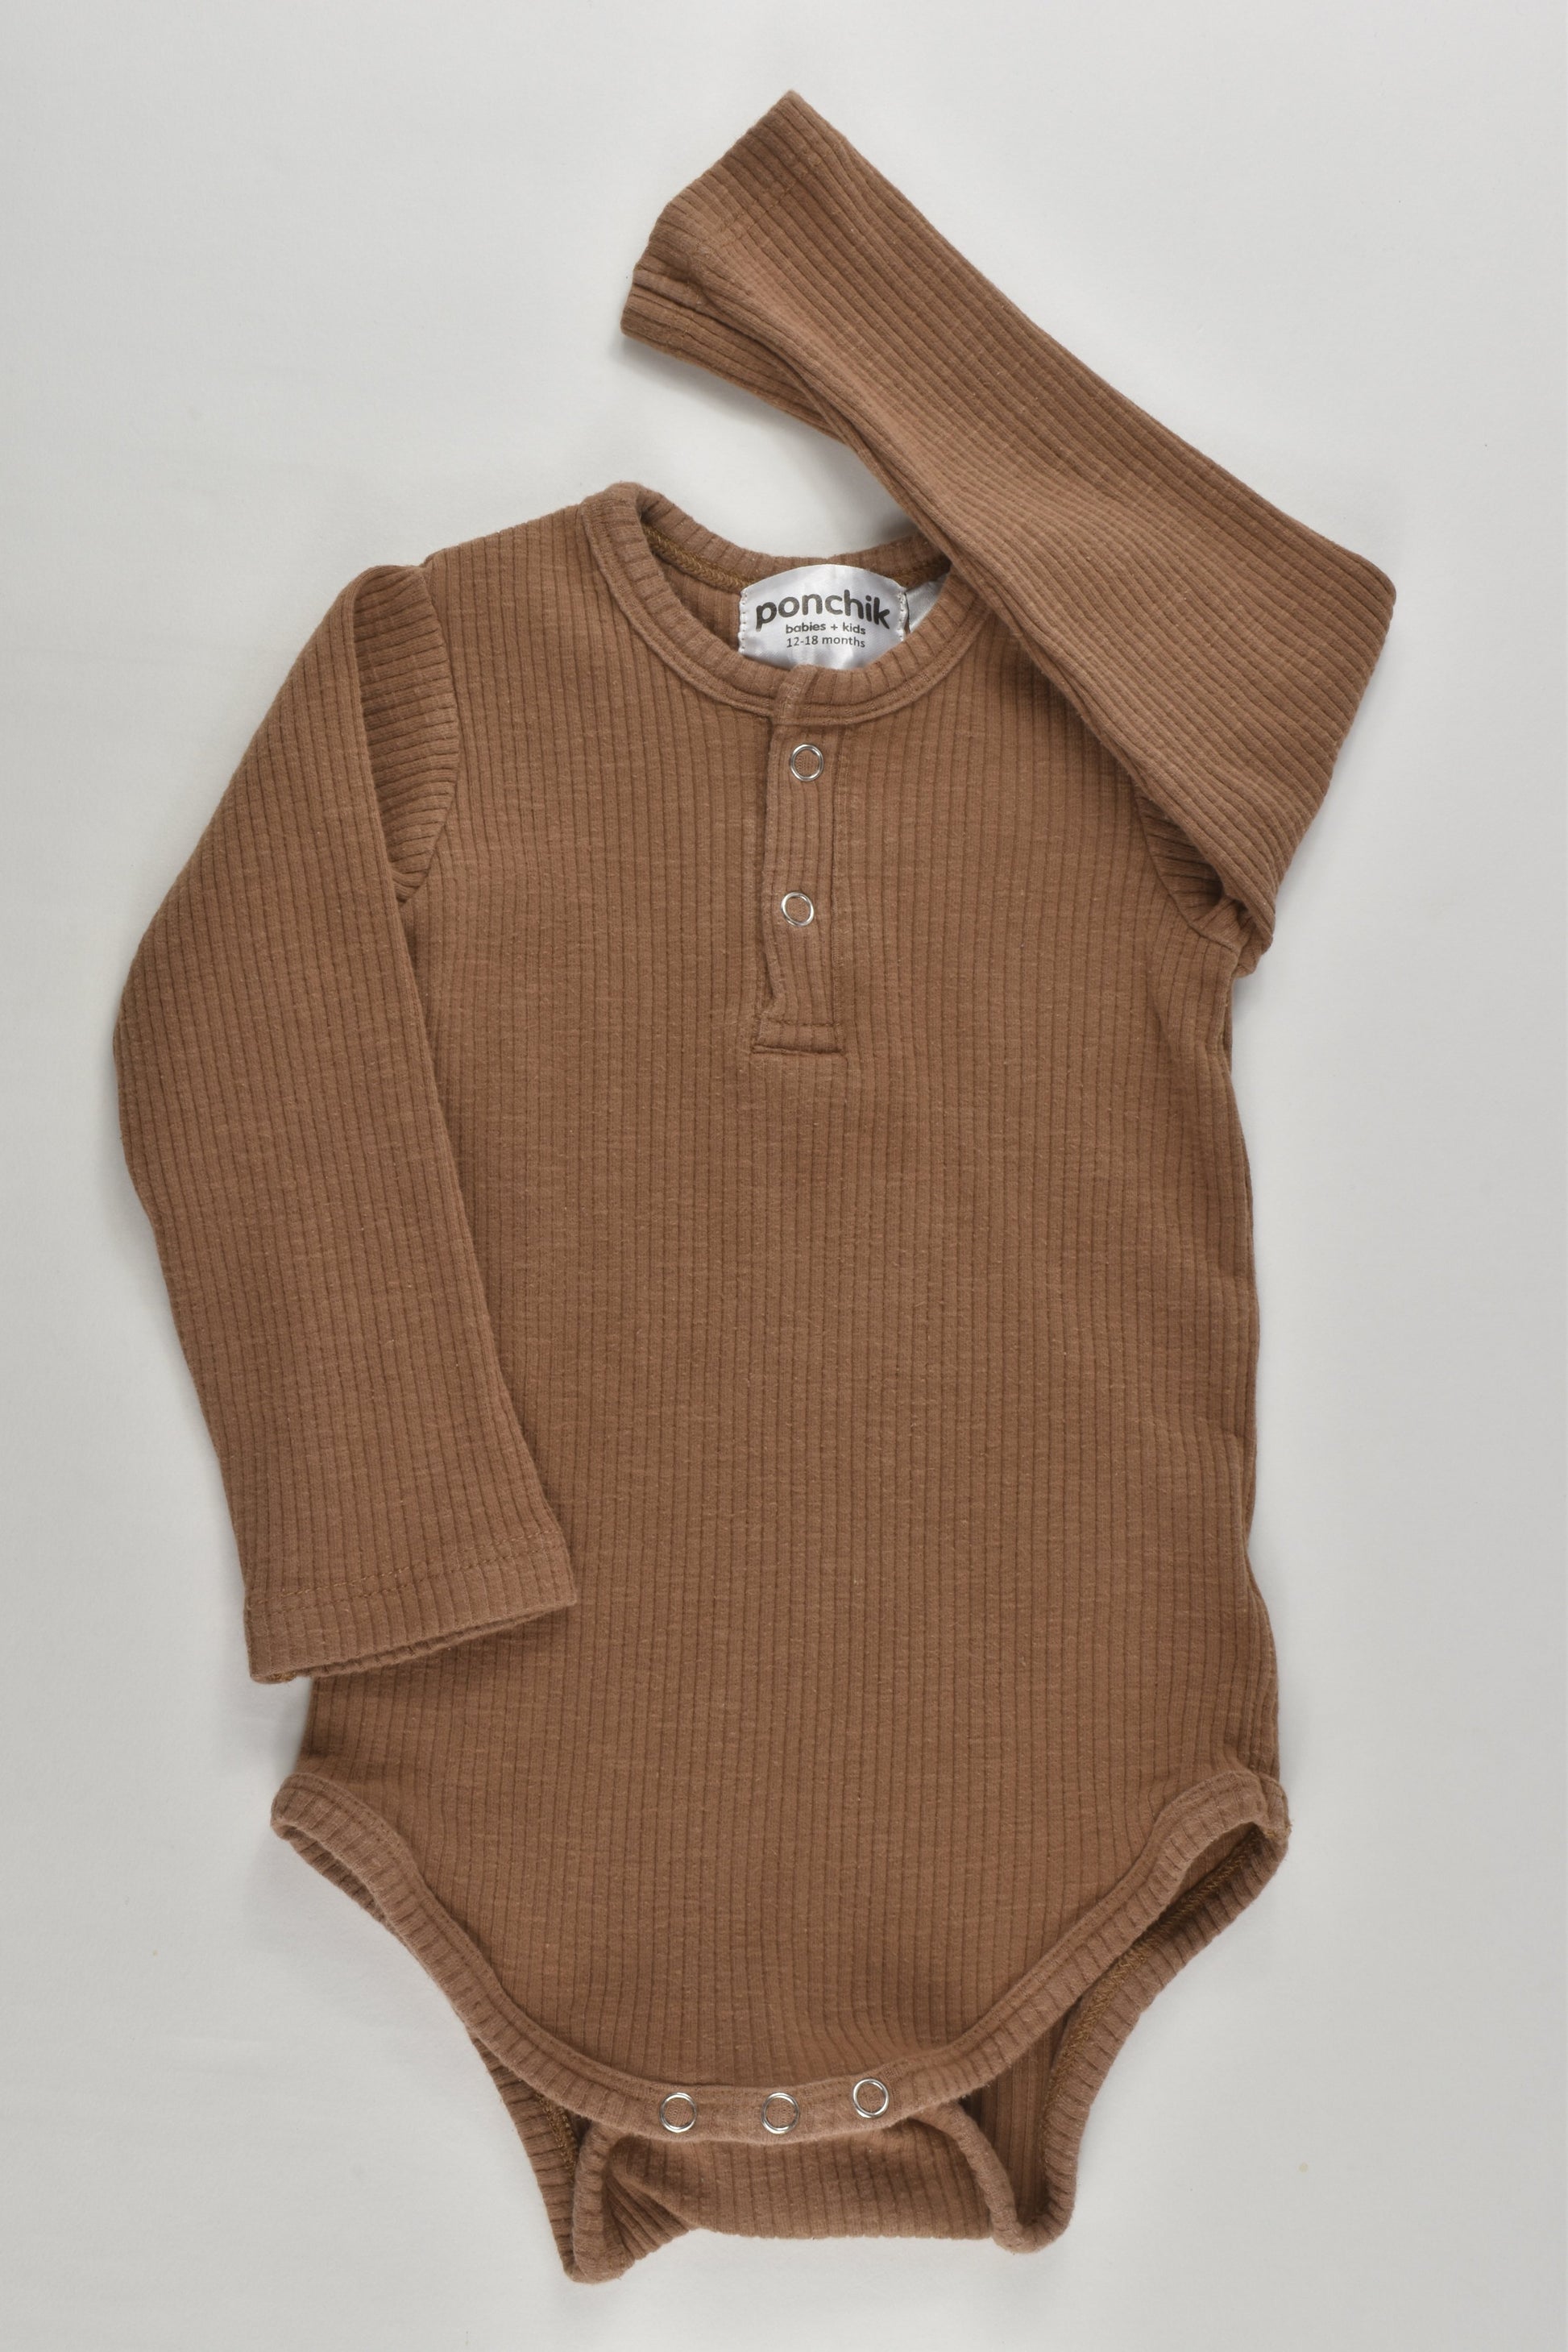 Ponchik (AU) Size 1 (12-18 months) Ribbed Bodysuit